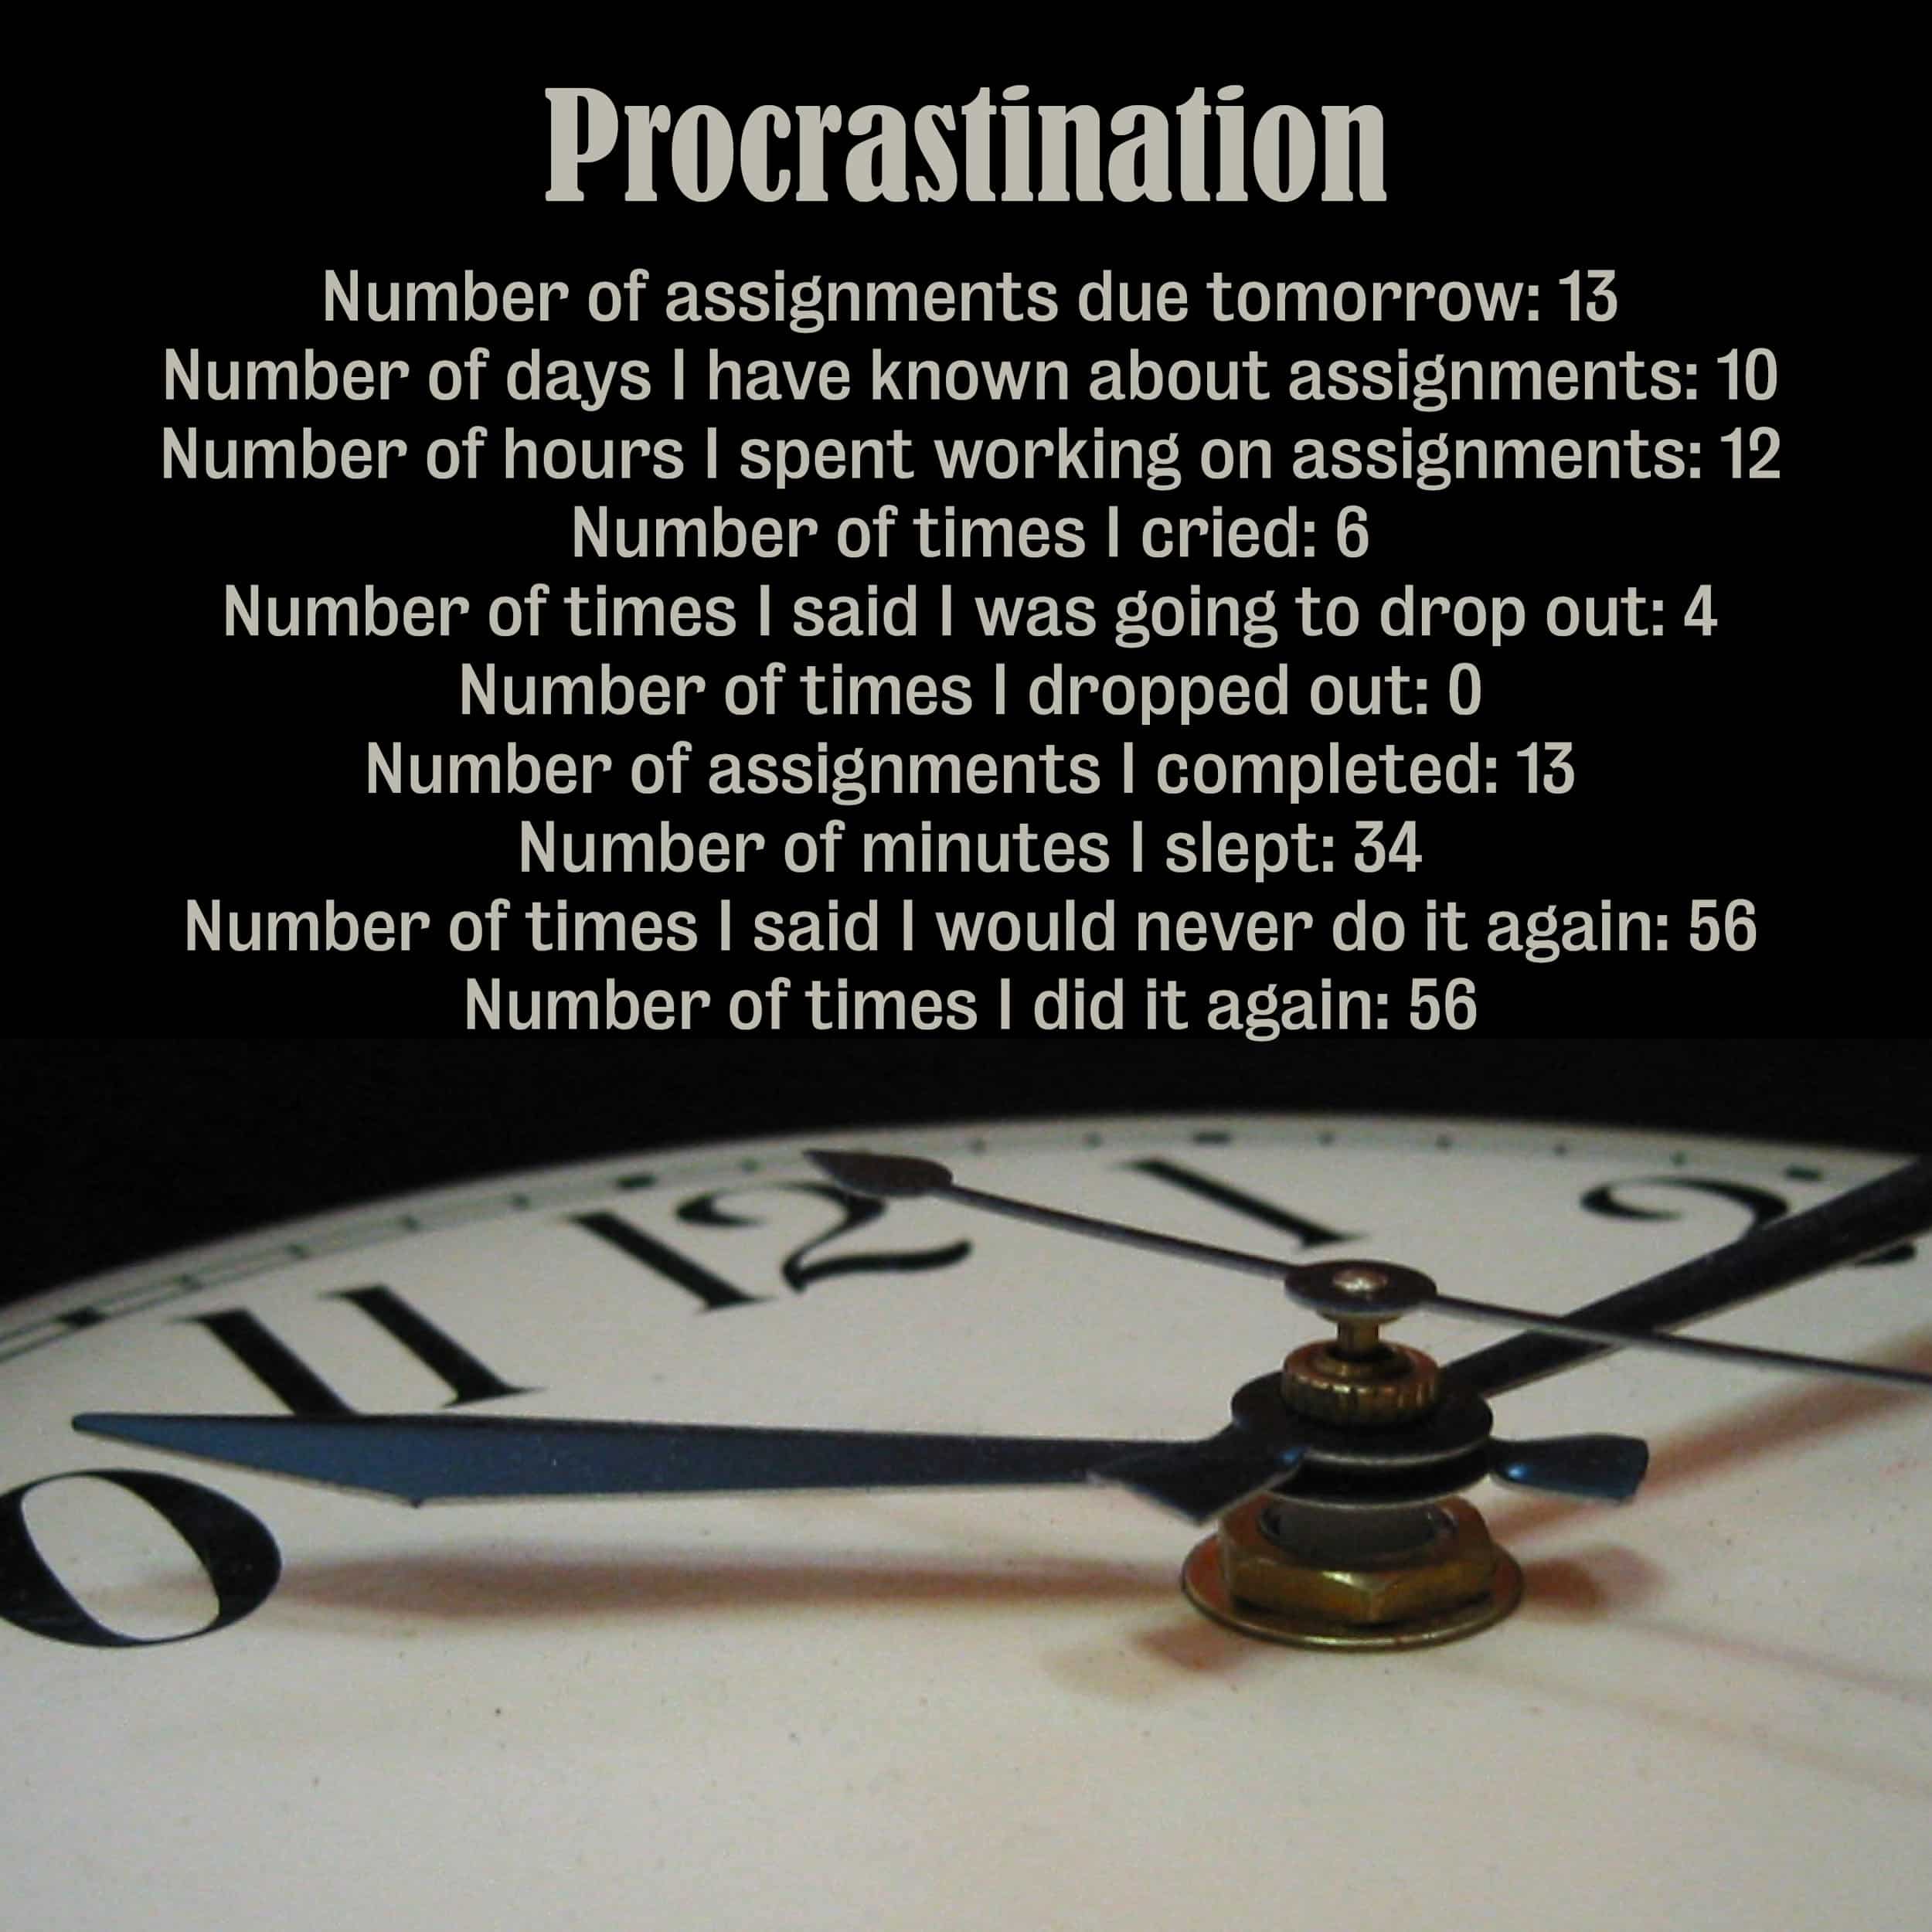 Procrastination statistics from last semester.